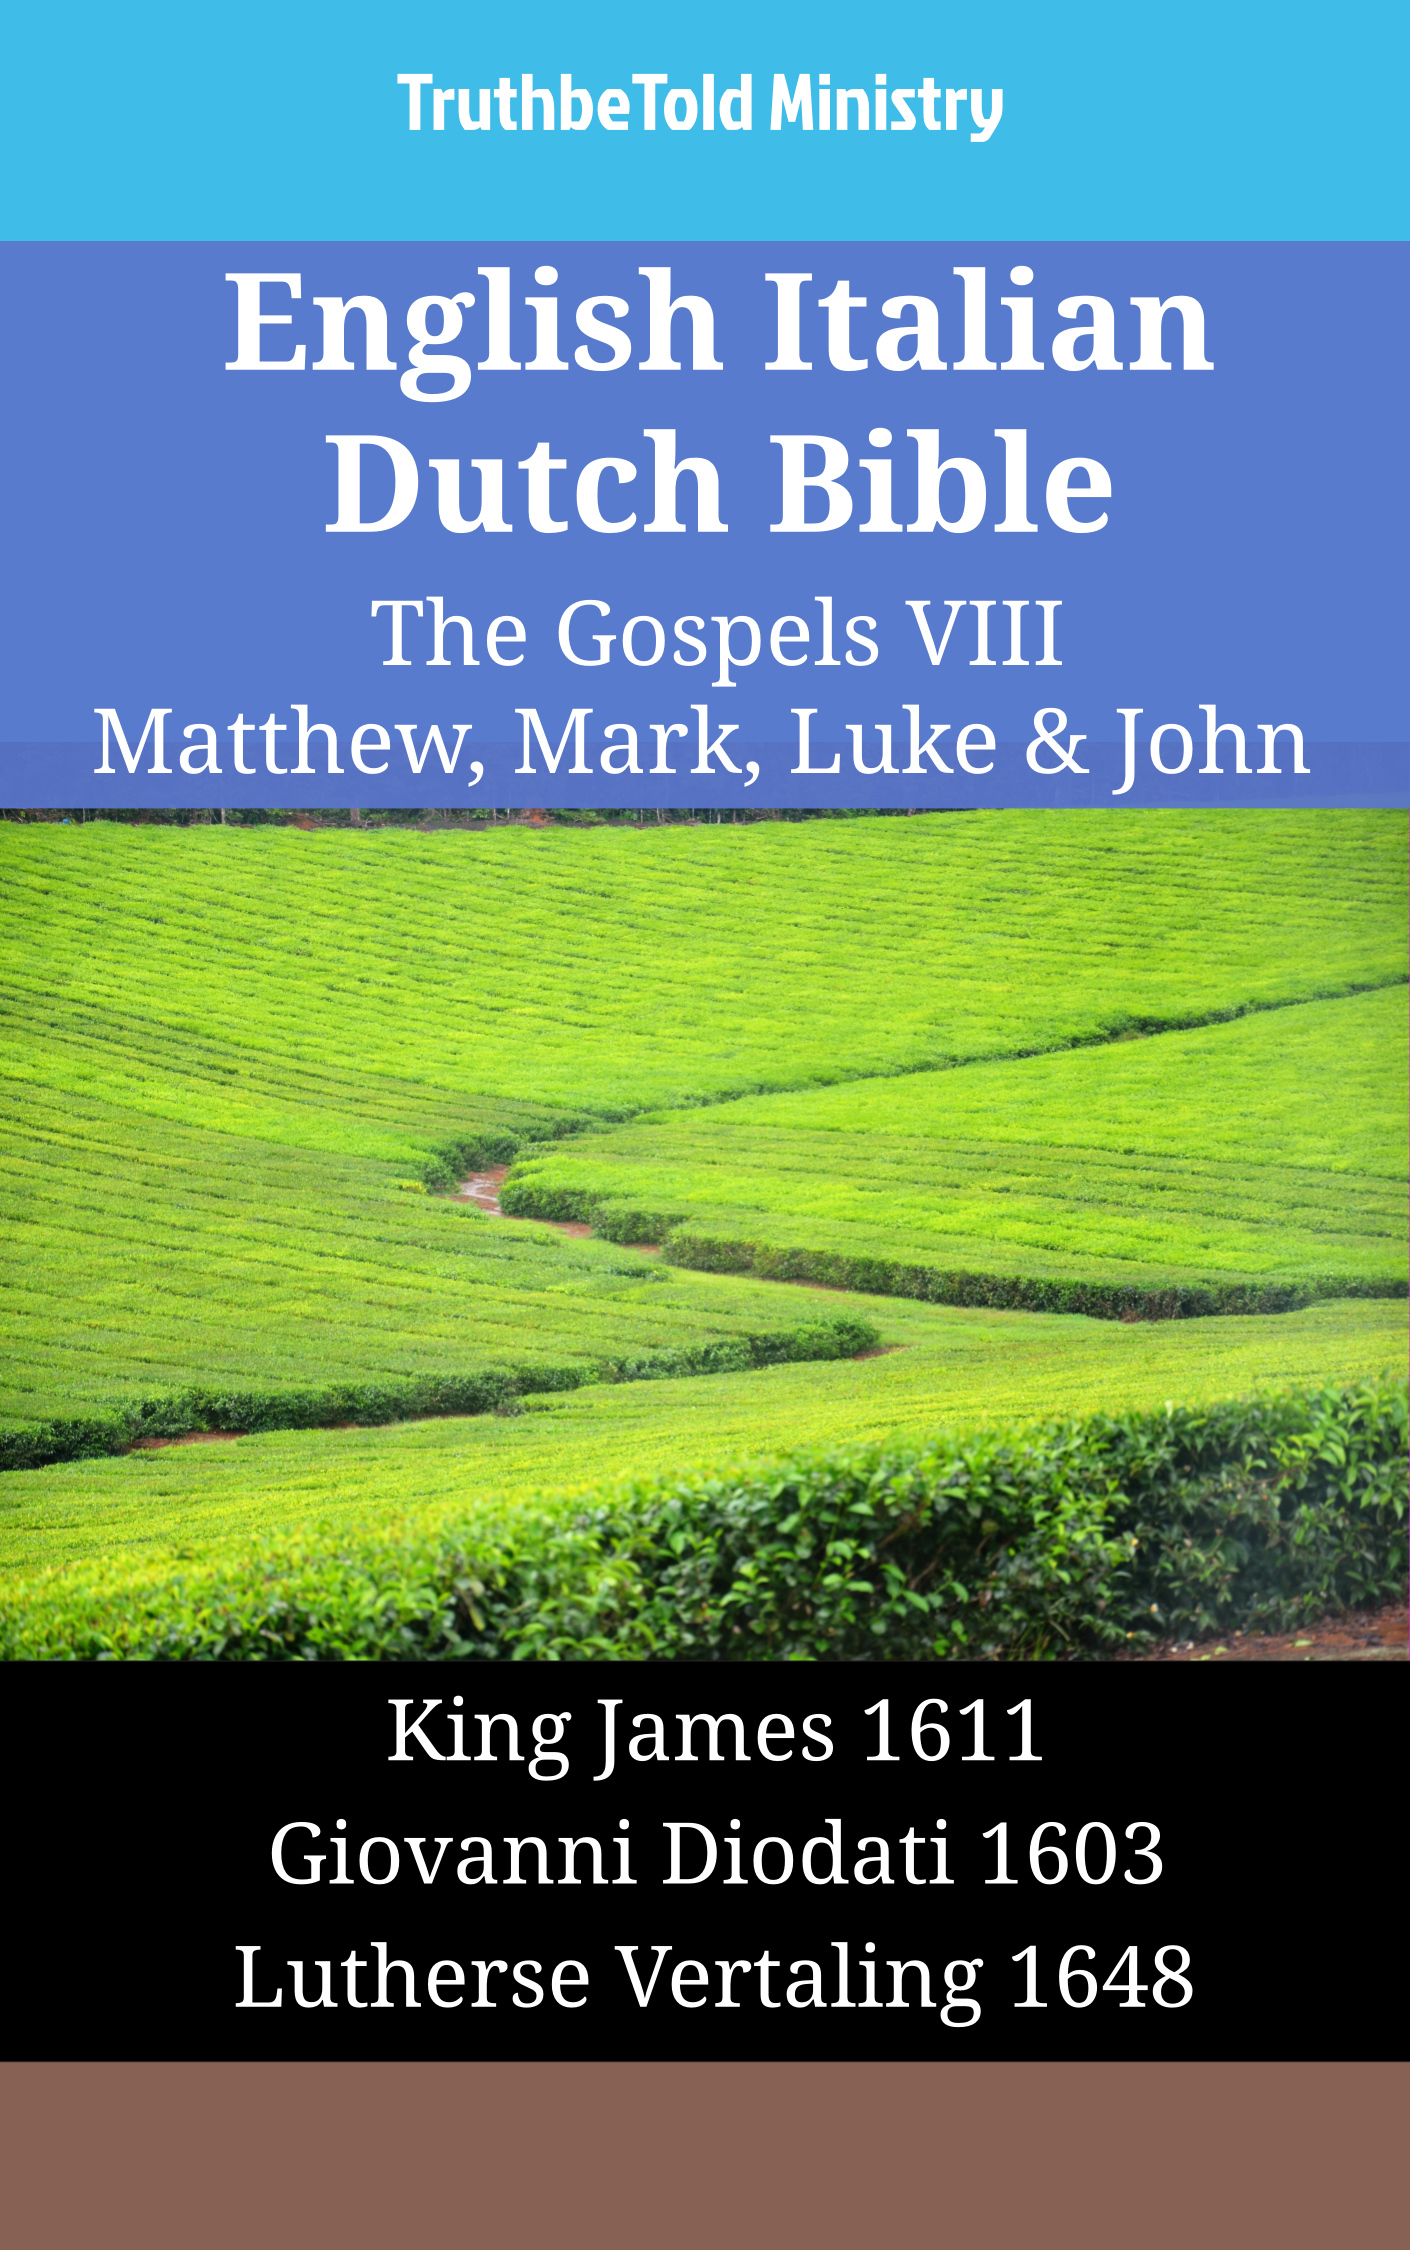 English Italian Dutch Bible - The Gospels VIII - Matthew, Mark, Luke & John